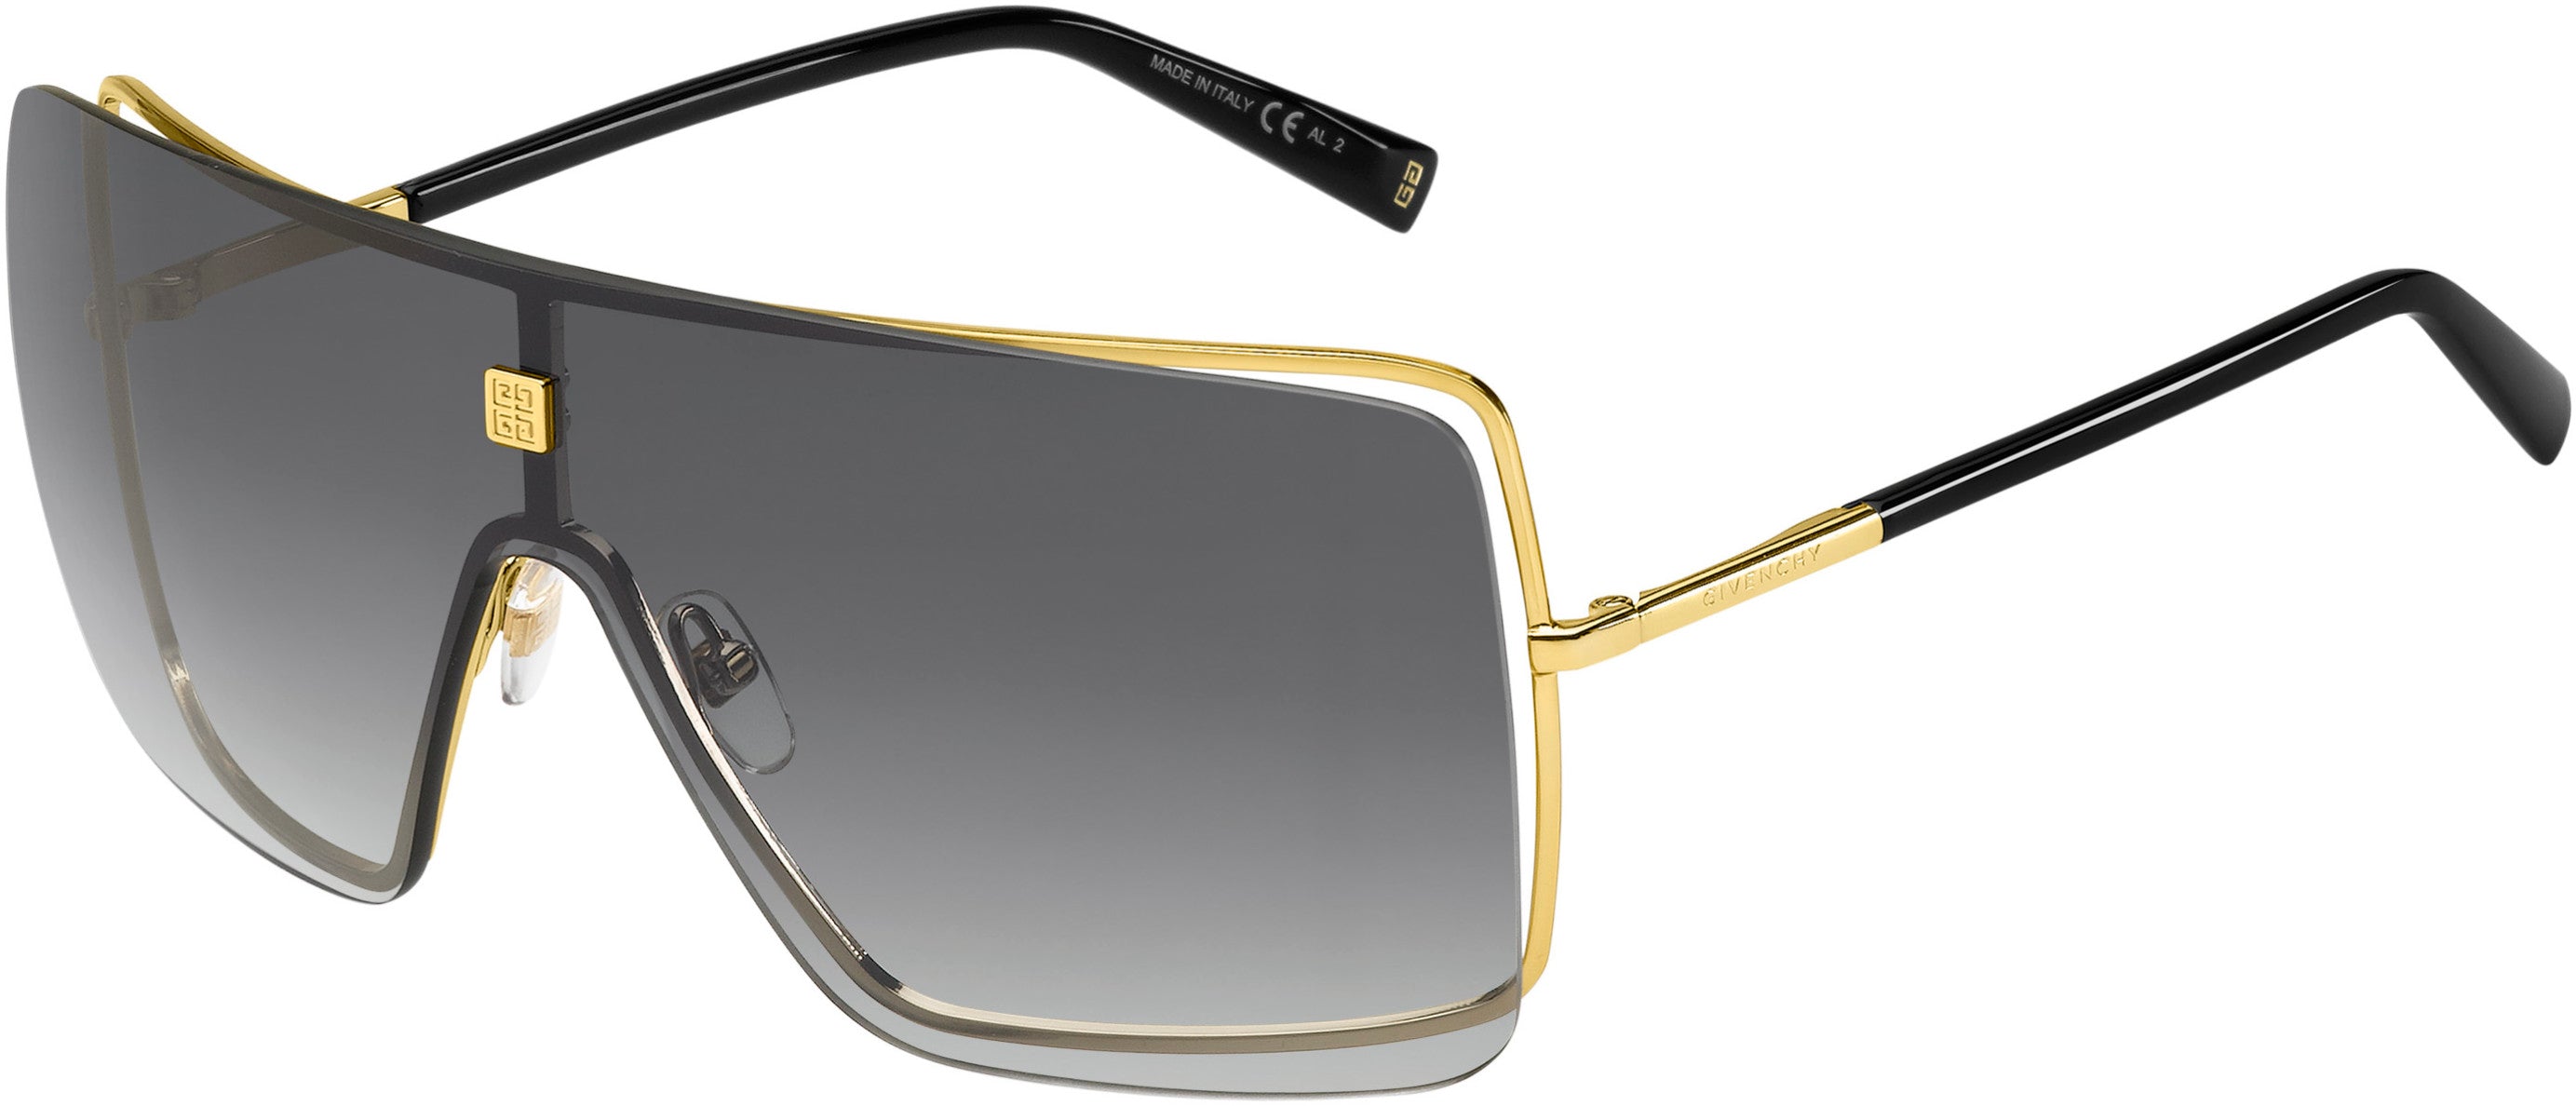  Givenchy 7167/S Rectangular Sunglasses 02F7-02F7  Gold Gray (9O Dark Gray Gradient)